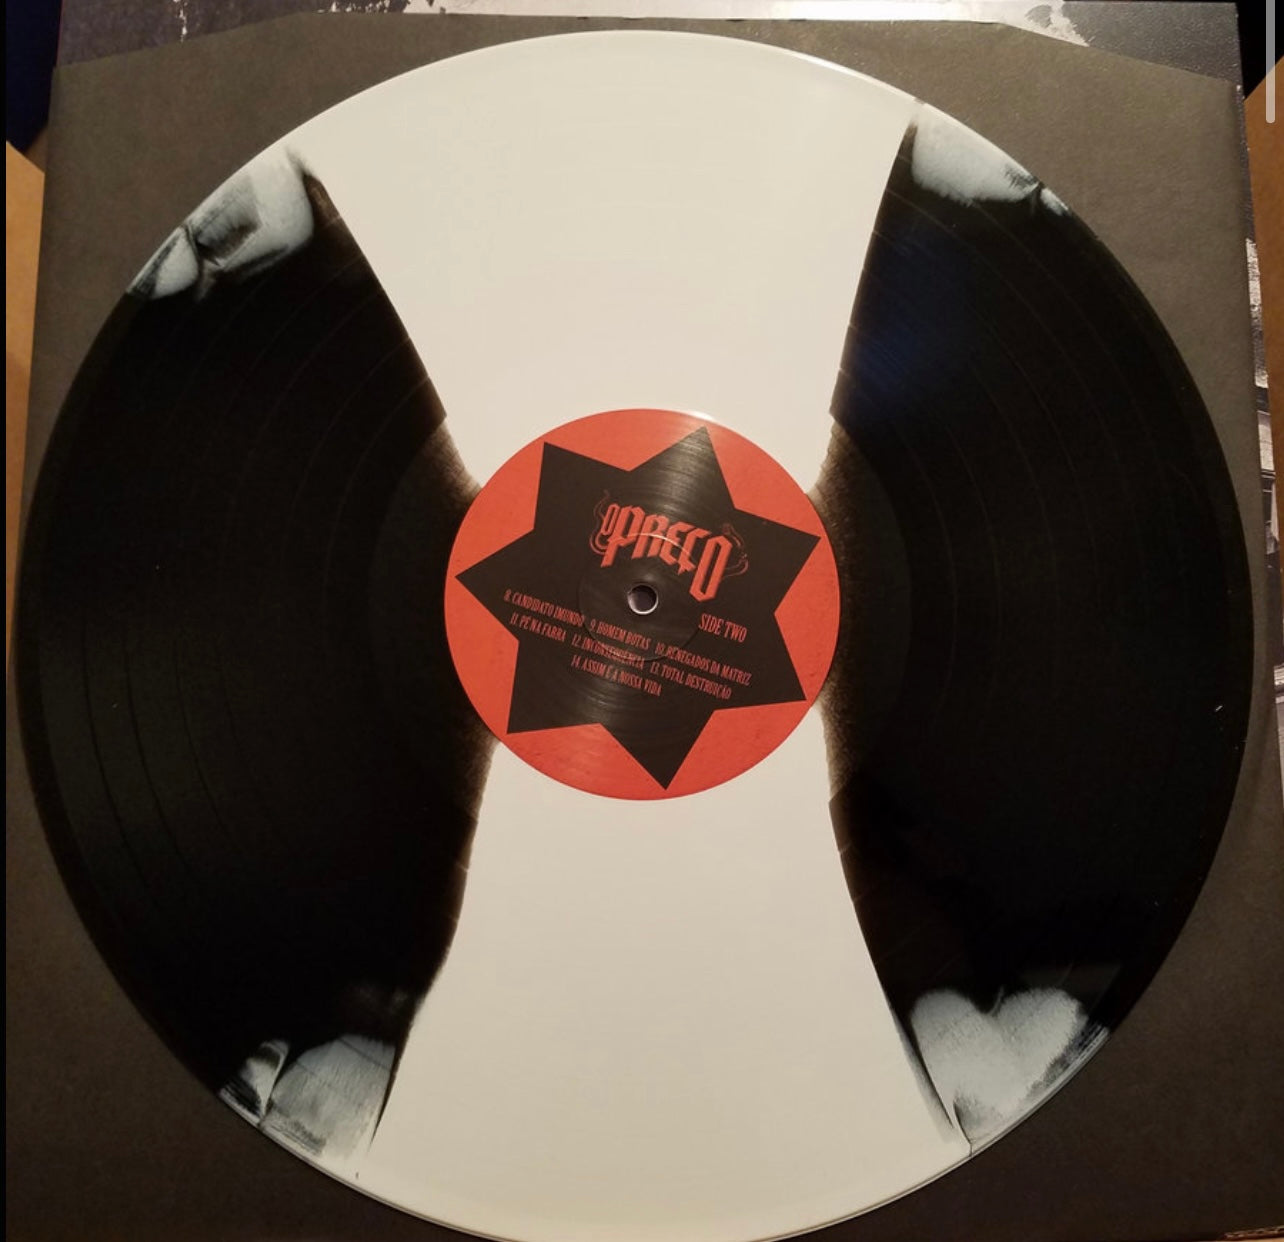 OMR-009 O PRECO s/t 12 inch Vinyl Record